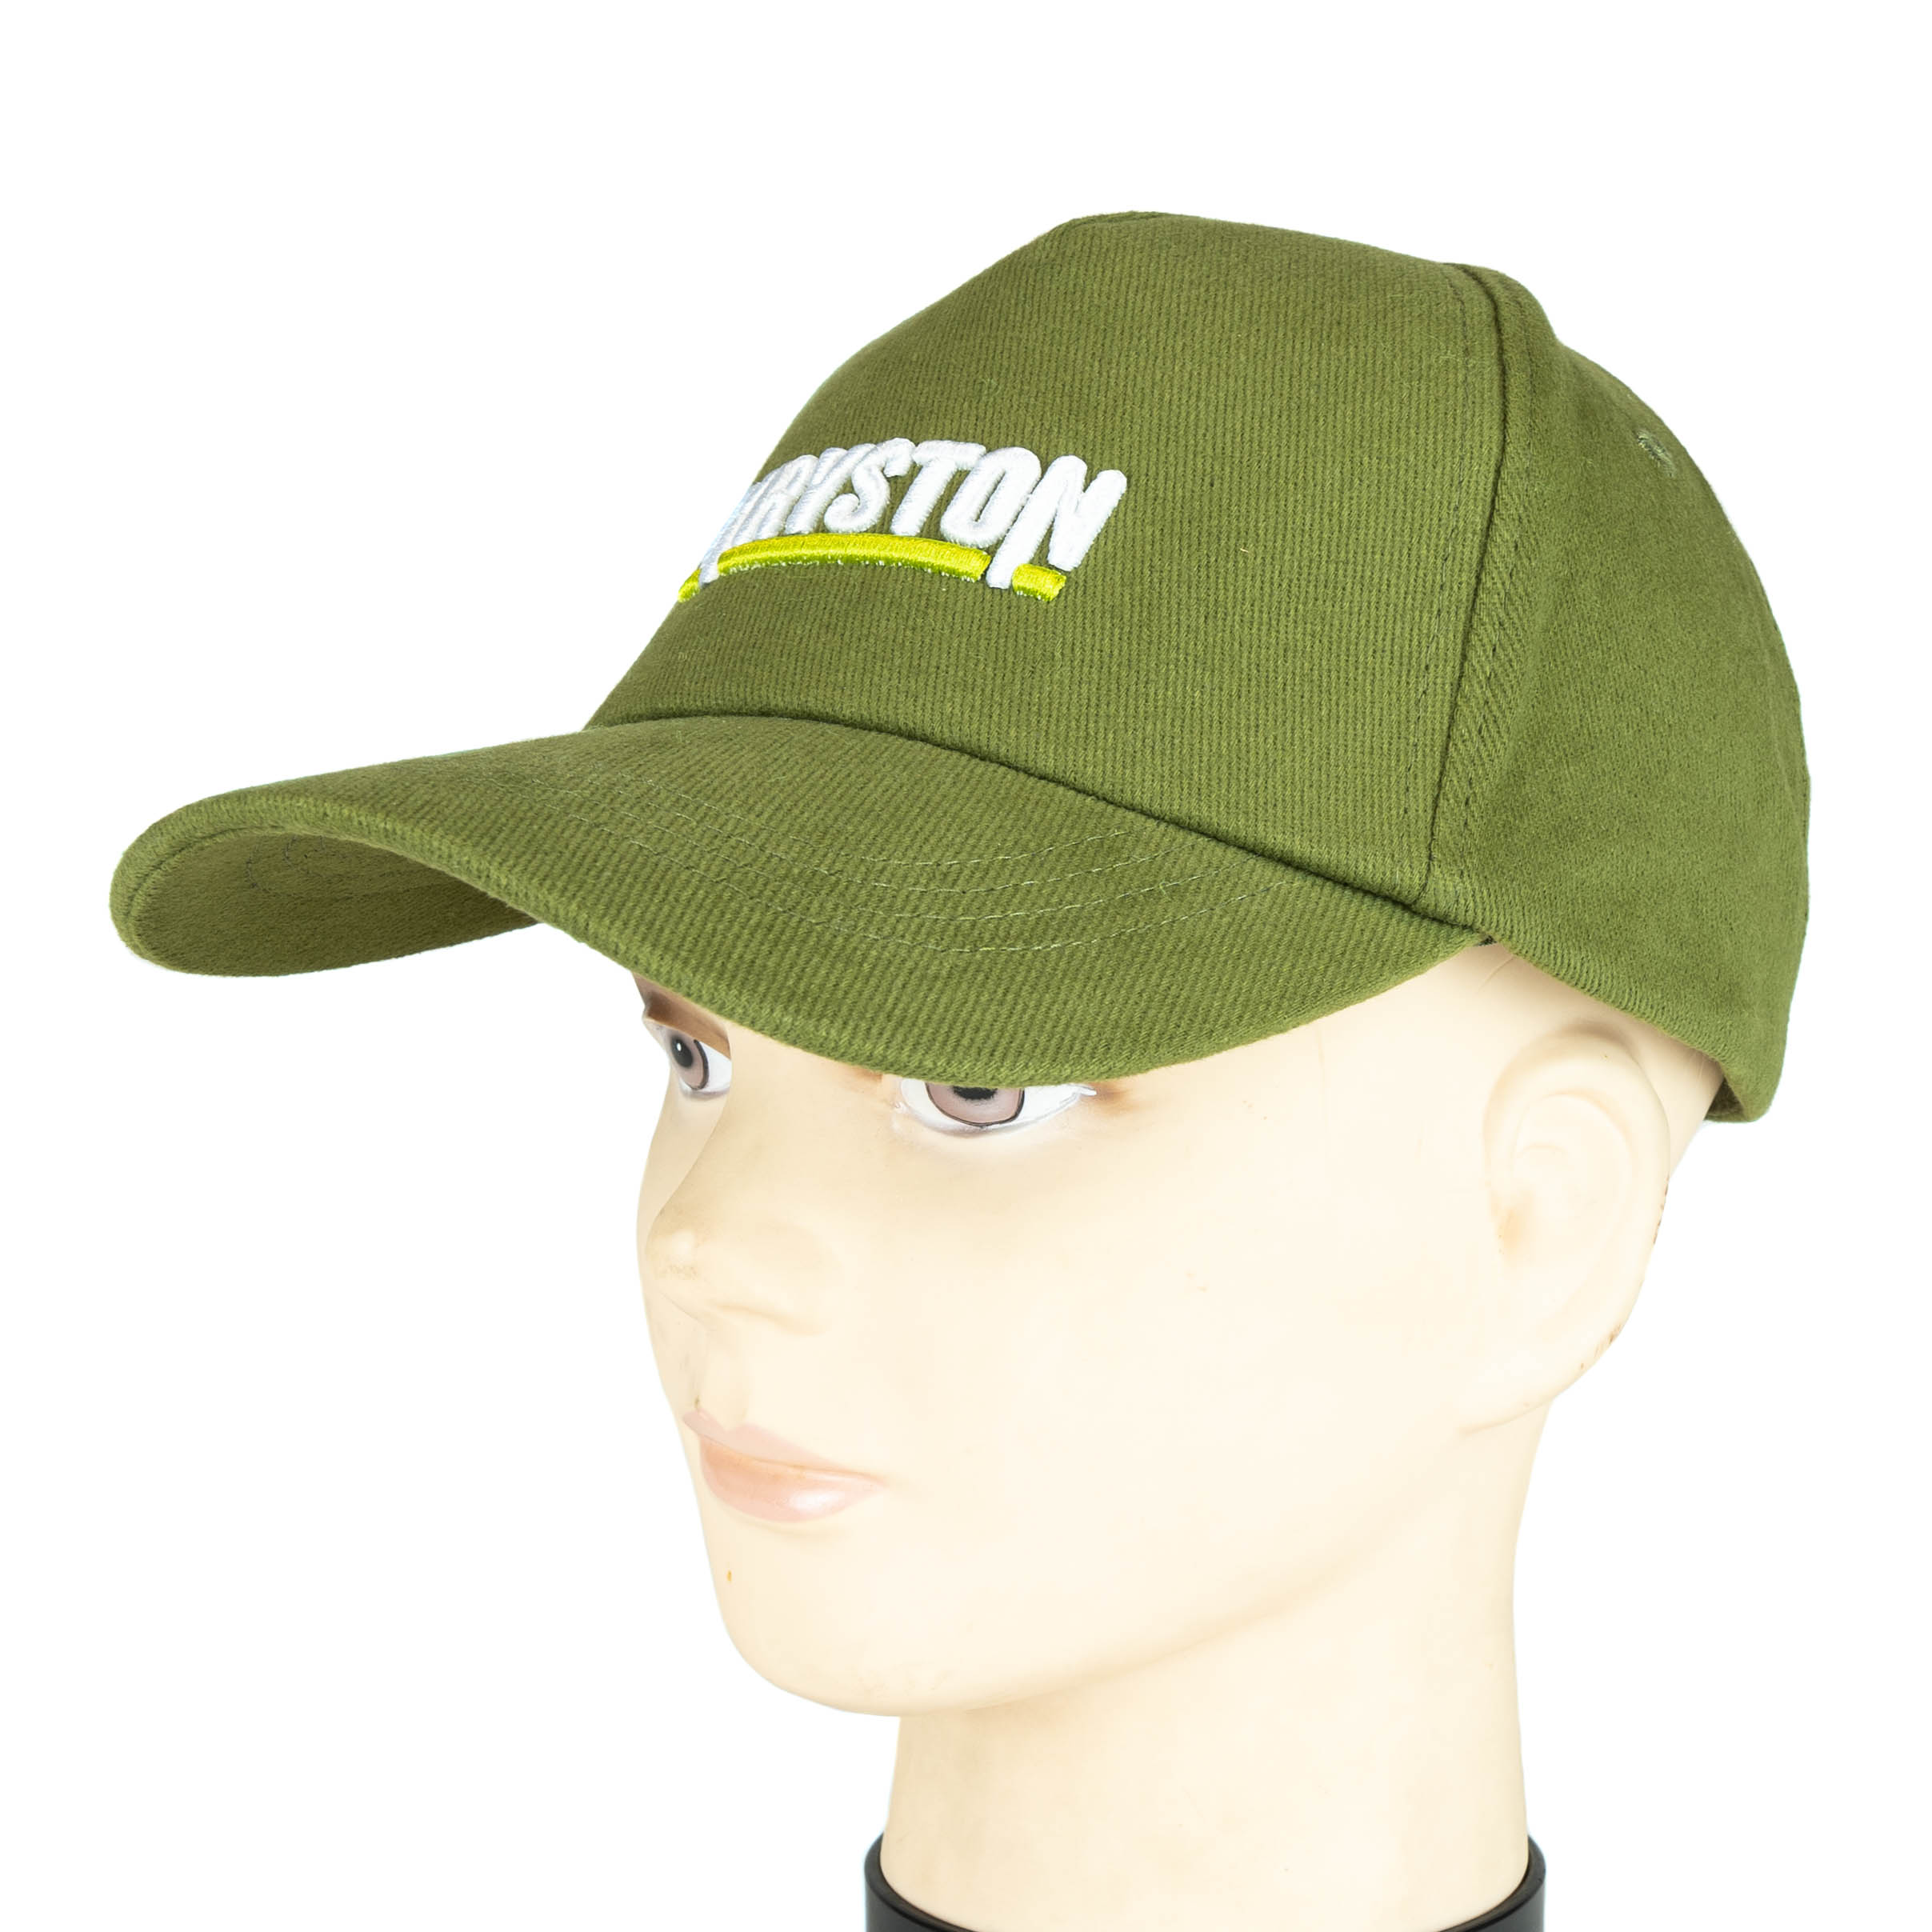 Kryston kšiltovka Base cap zelená